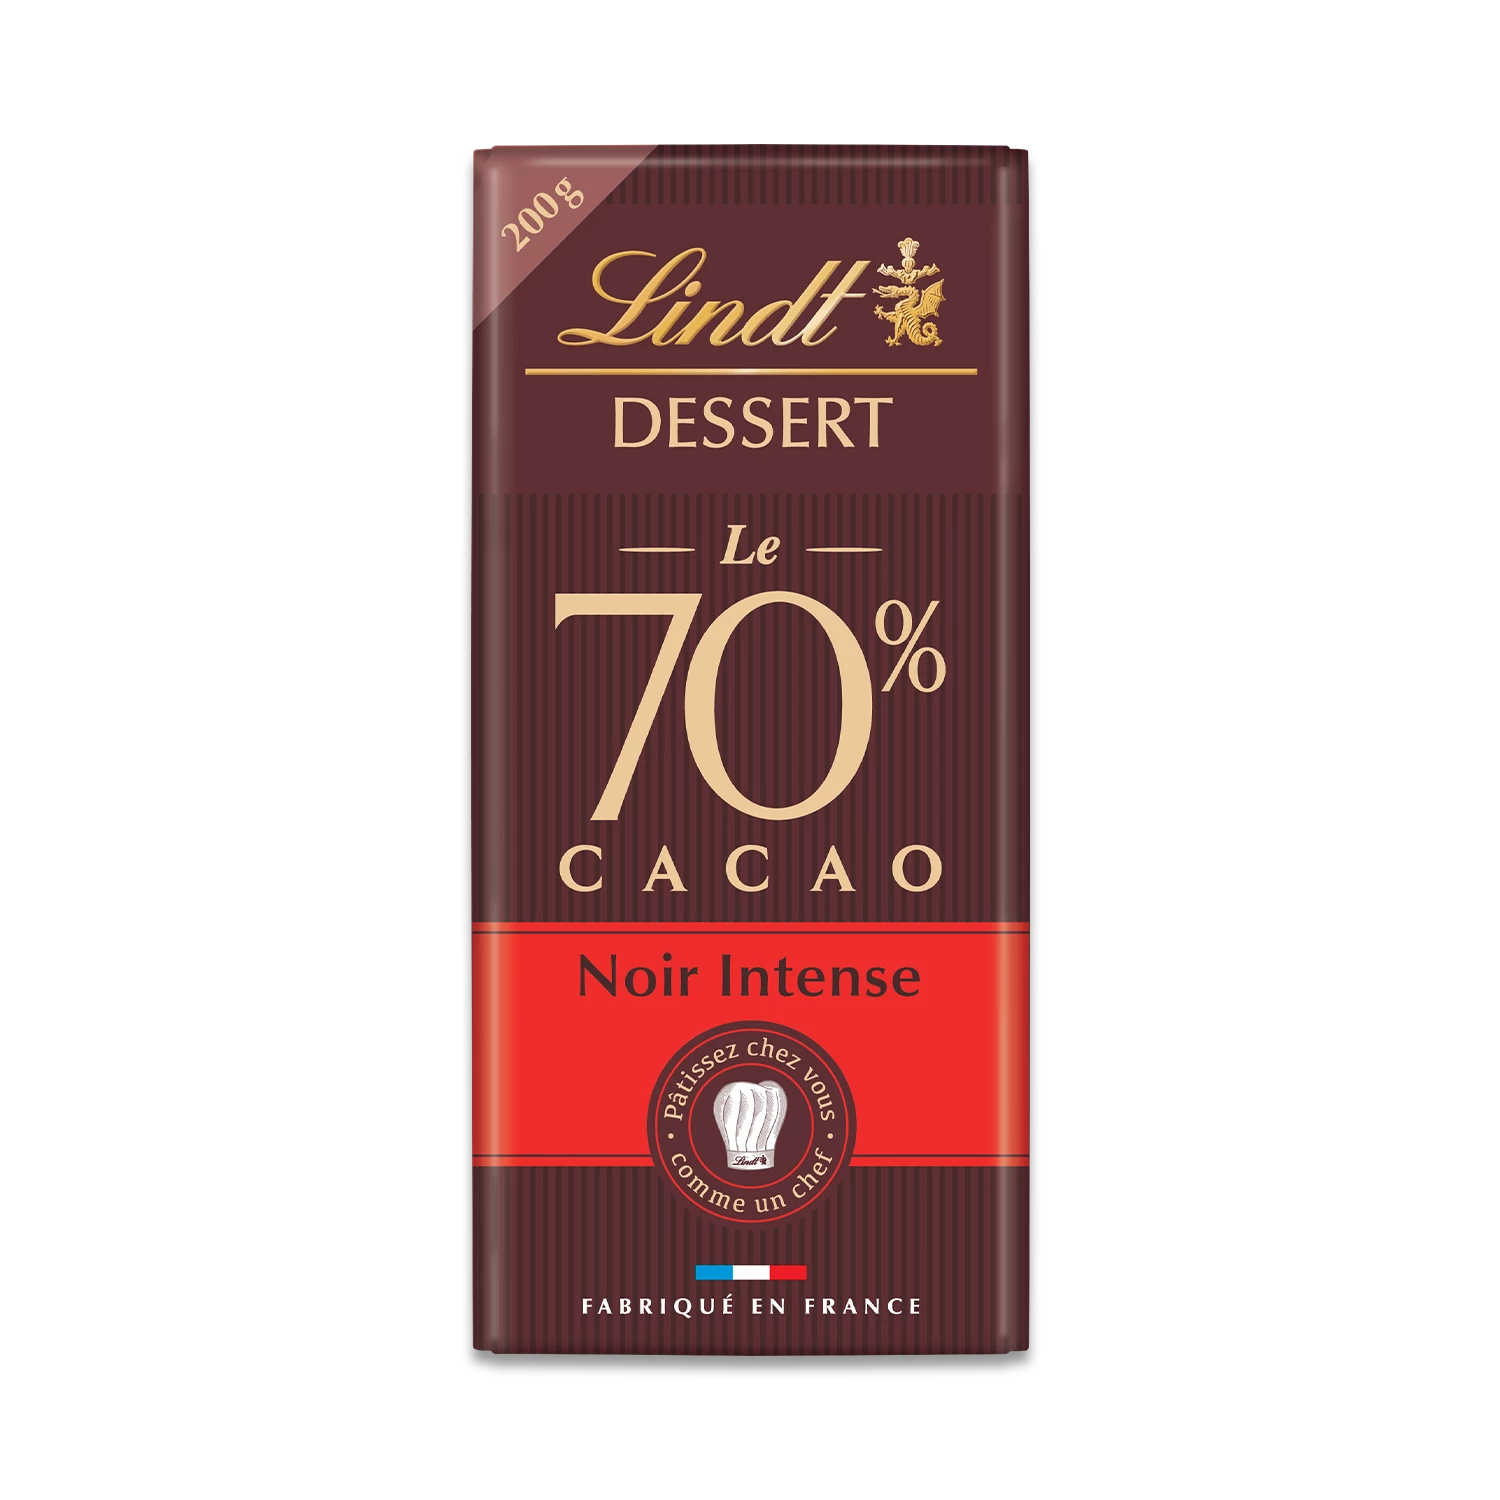 Таблетка какао Dark Dessert 70% Intense, 200 г - LINDT